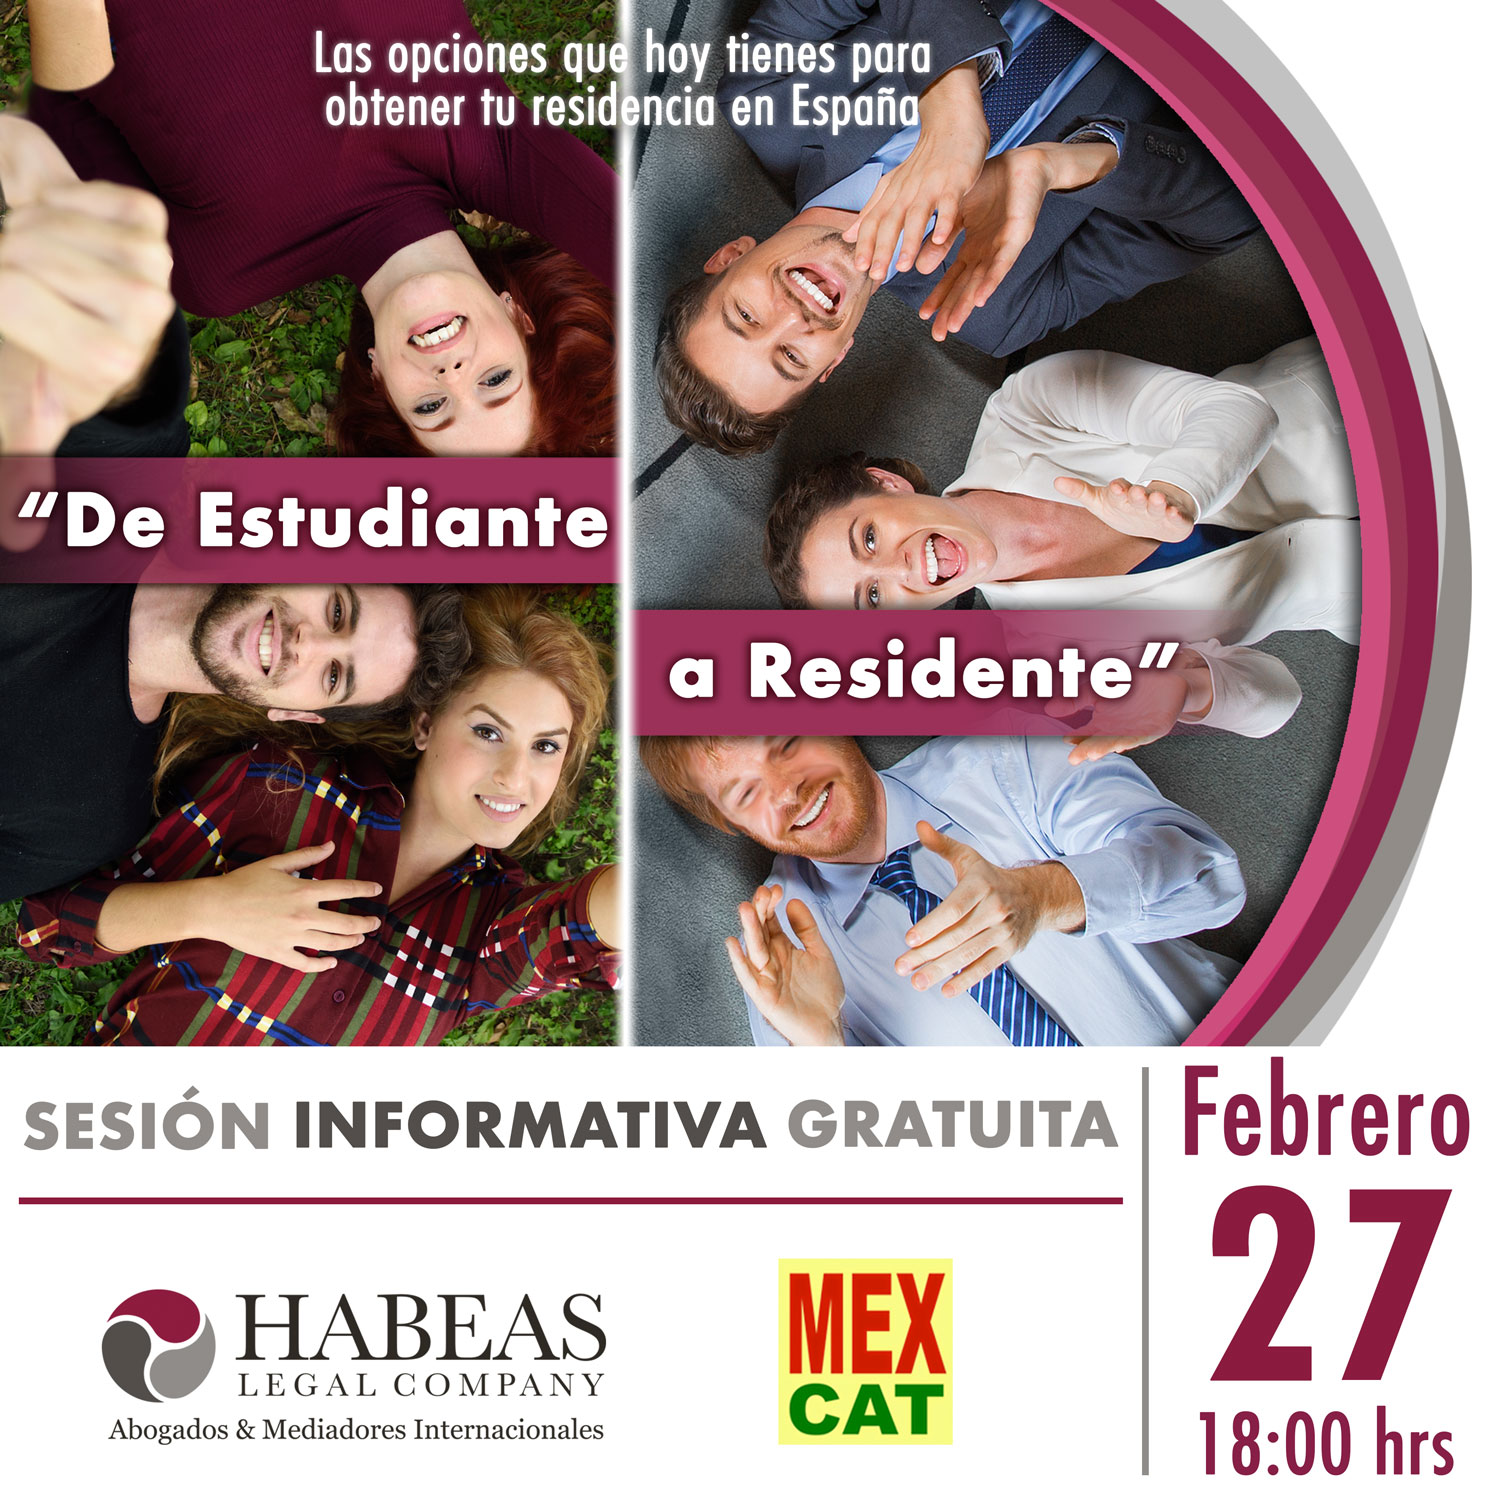 Sesion informativa gratuita para estudiar en España